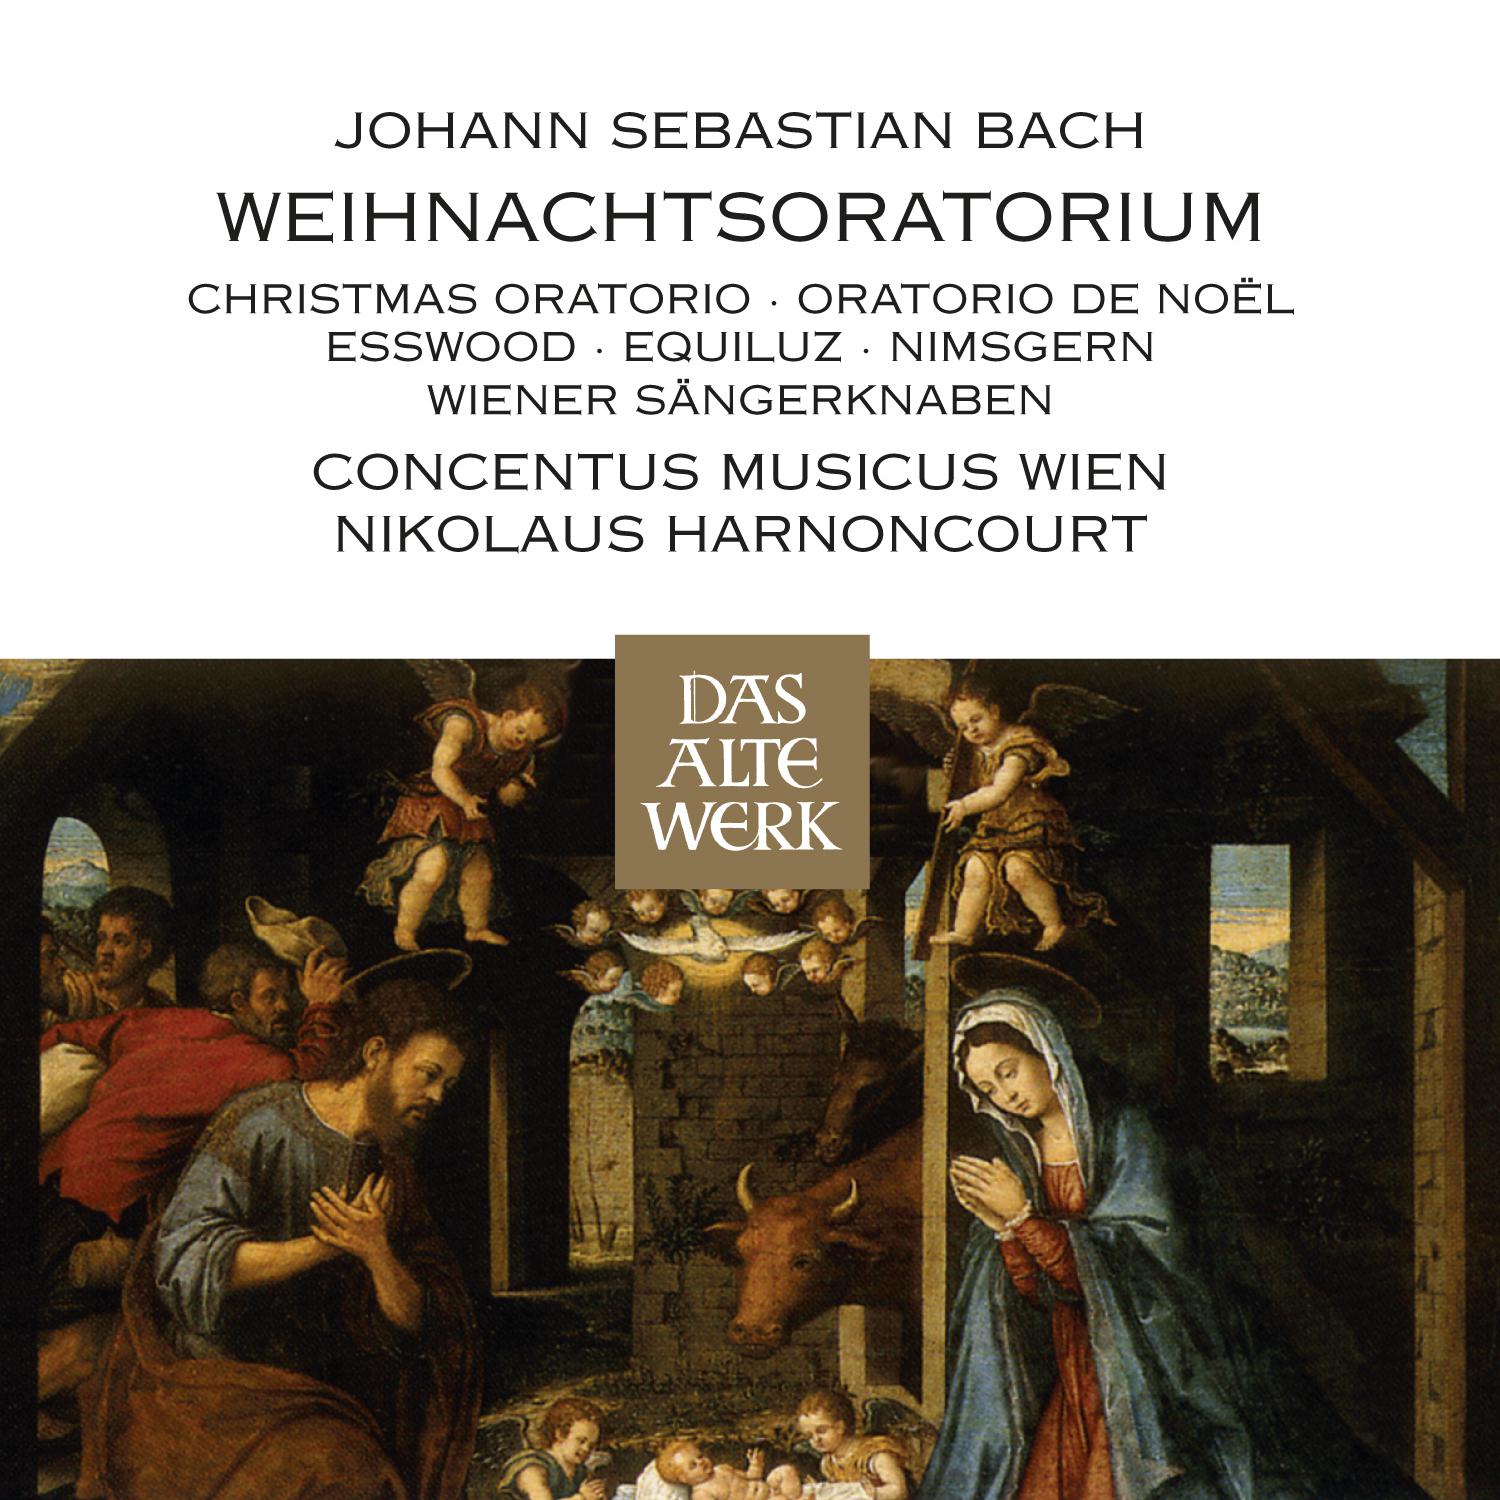 Weihnachtsoratorium, BWV 248, Part II: 'So geht denn hin'